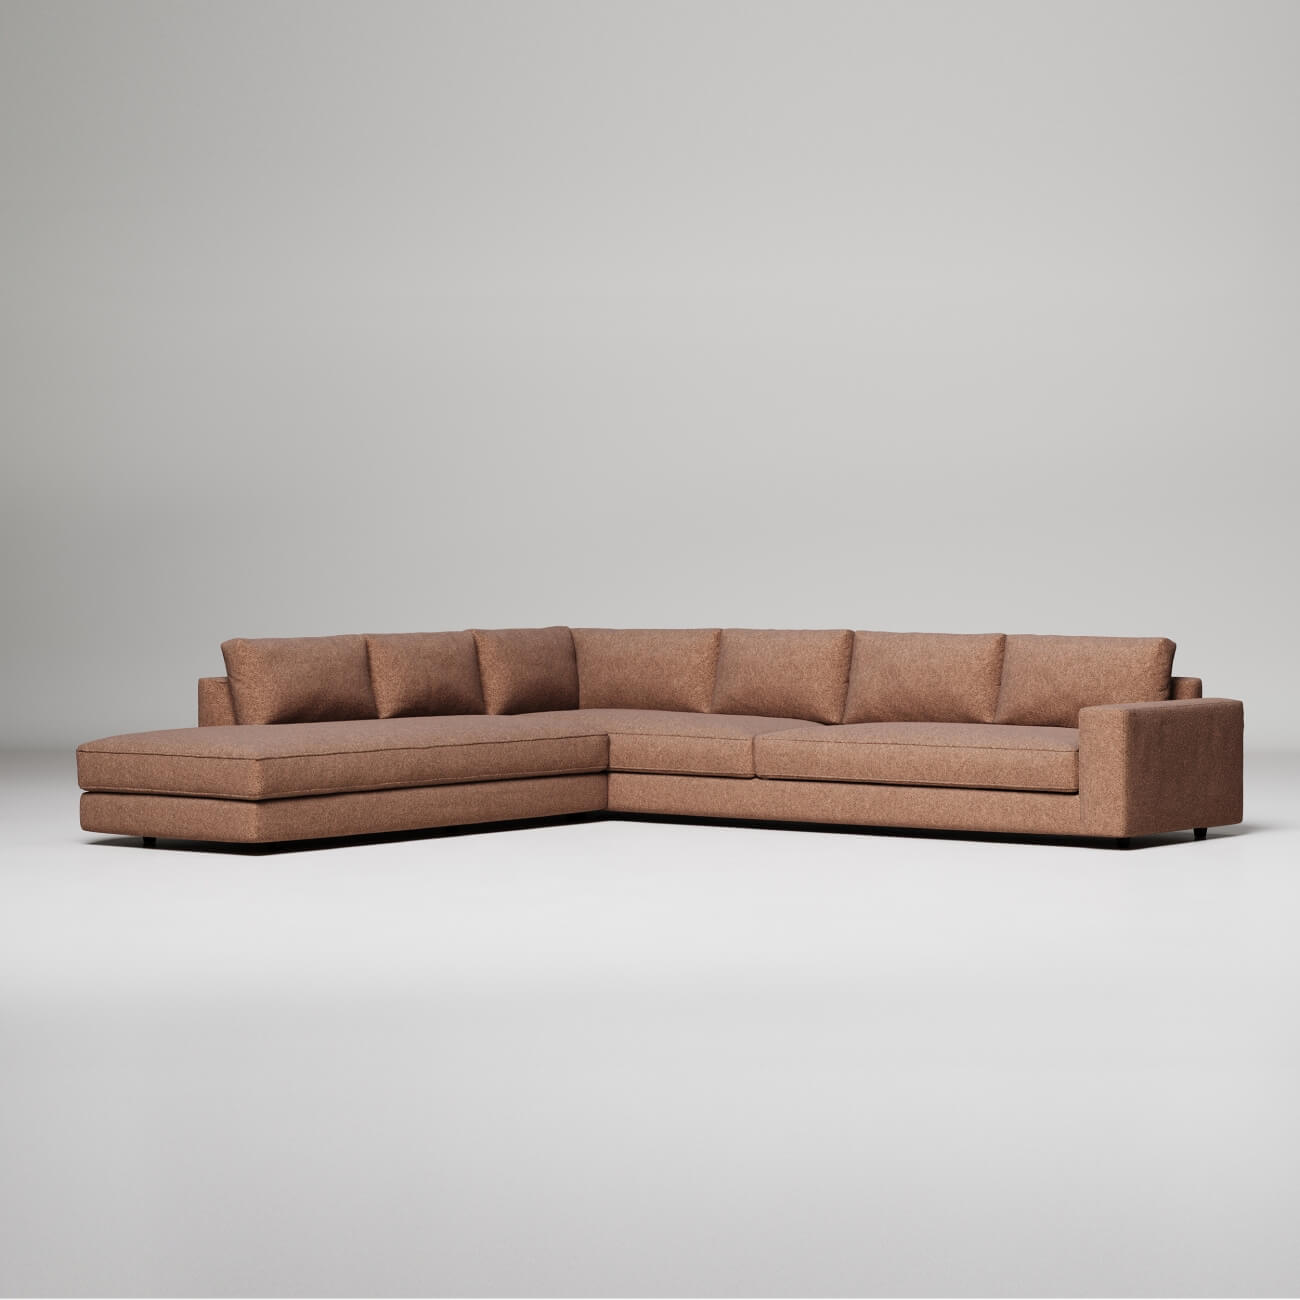 Large modular sofa in a light terra cotta colour